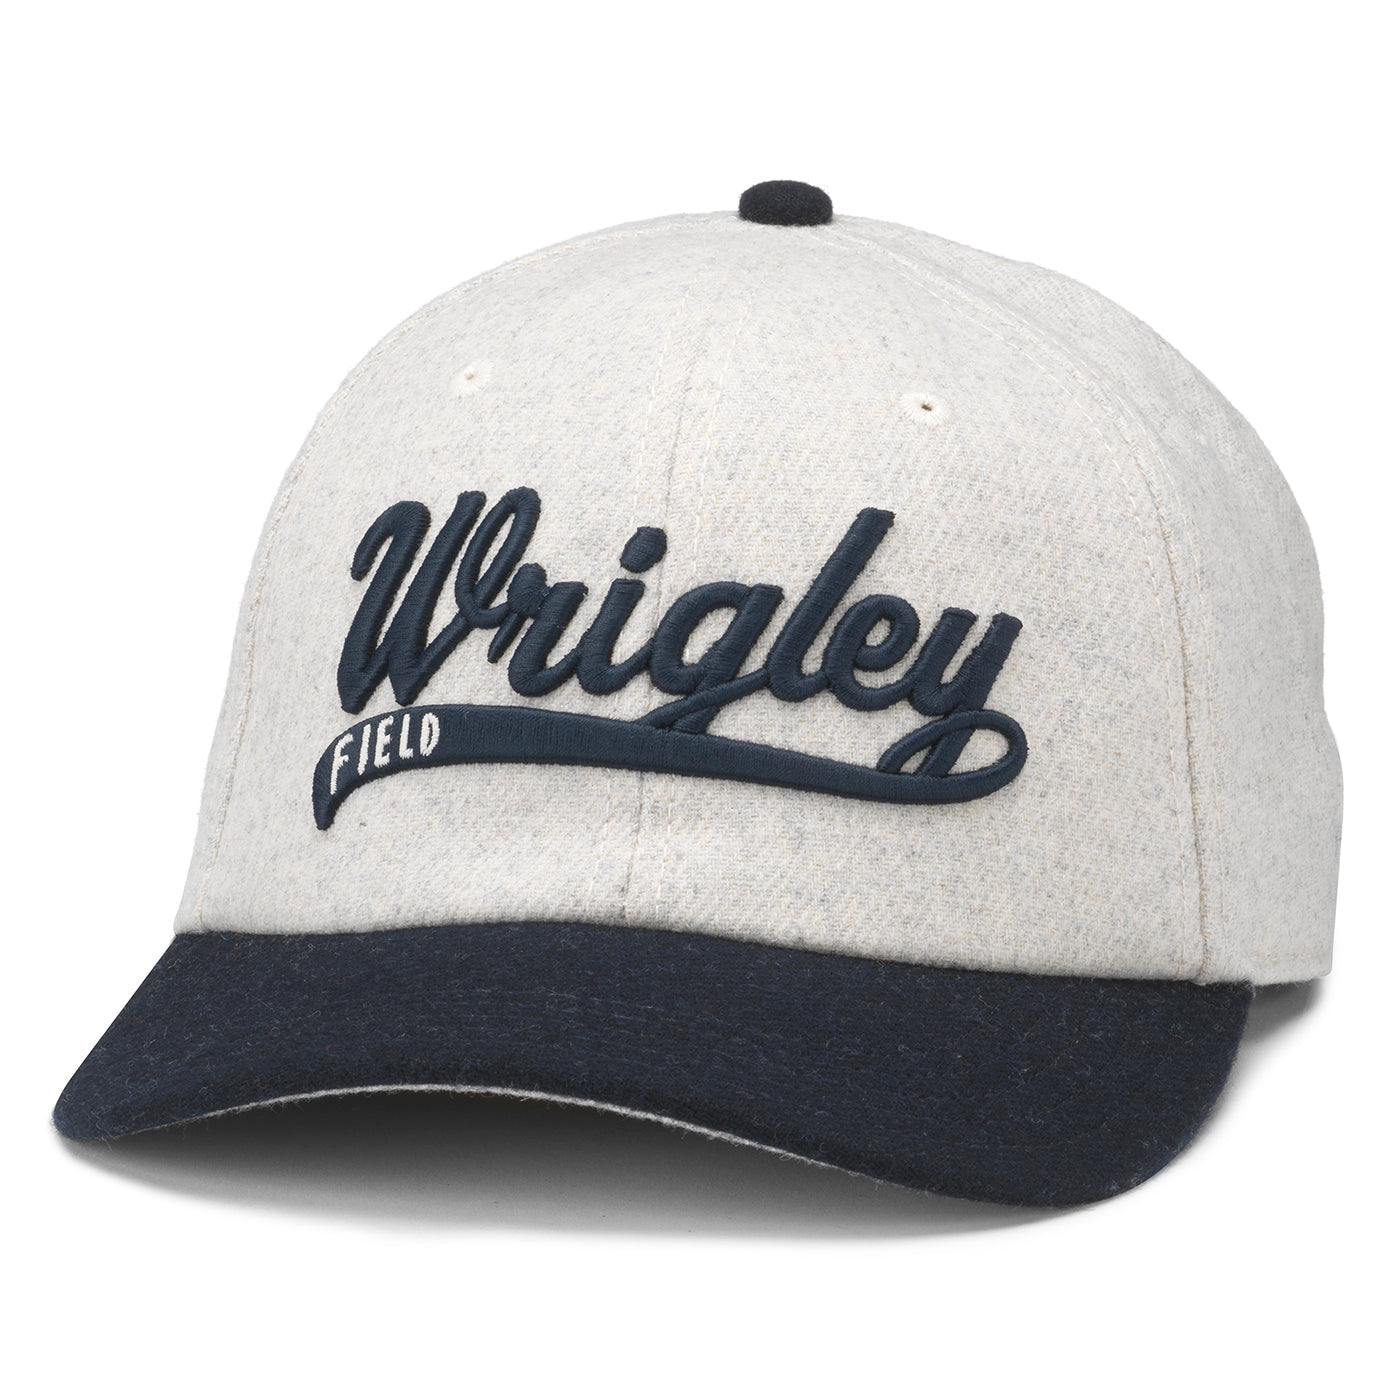 WRIGLEY FIELD BALLPARK IVORY AND NAVY ADJUSTABLE CAP